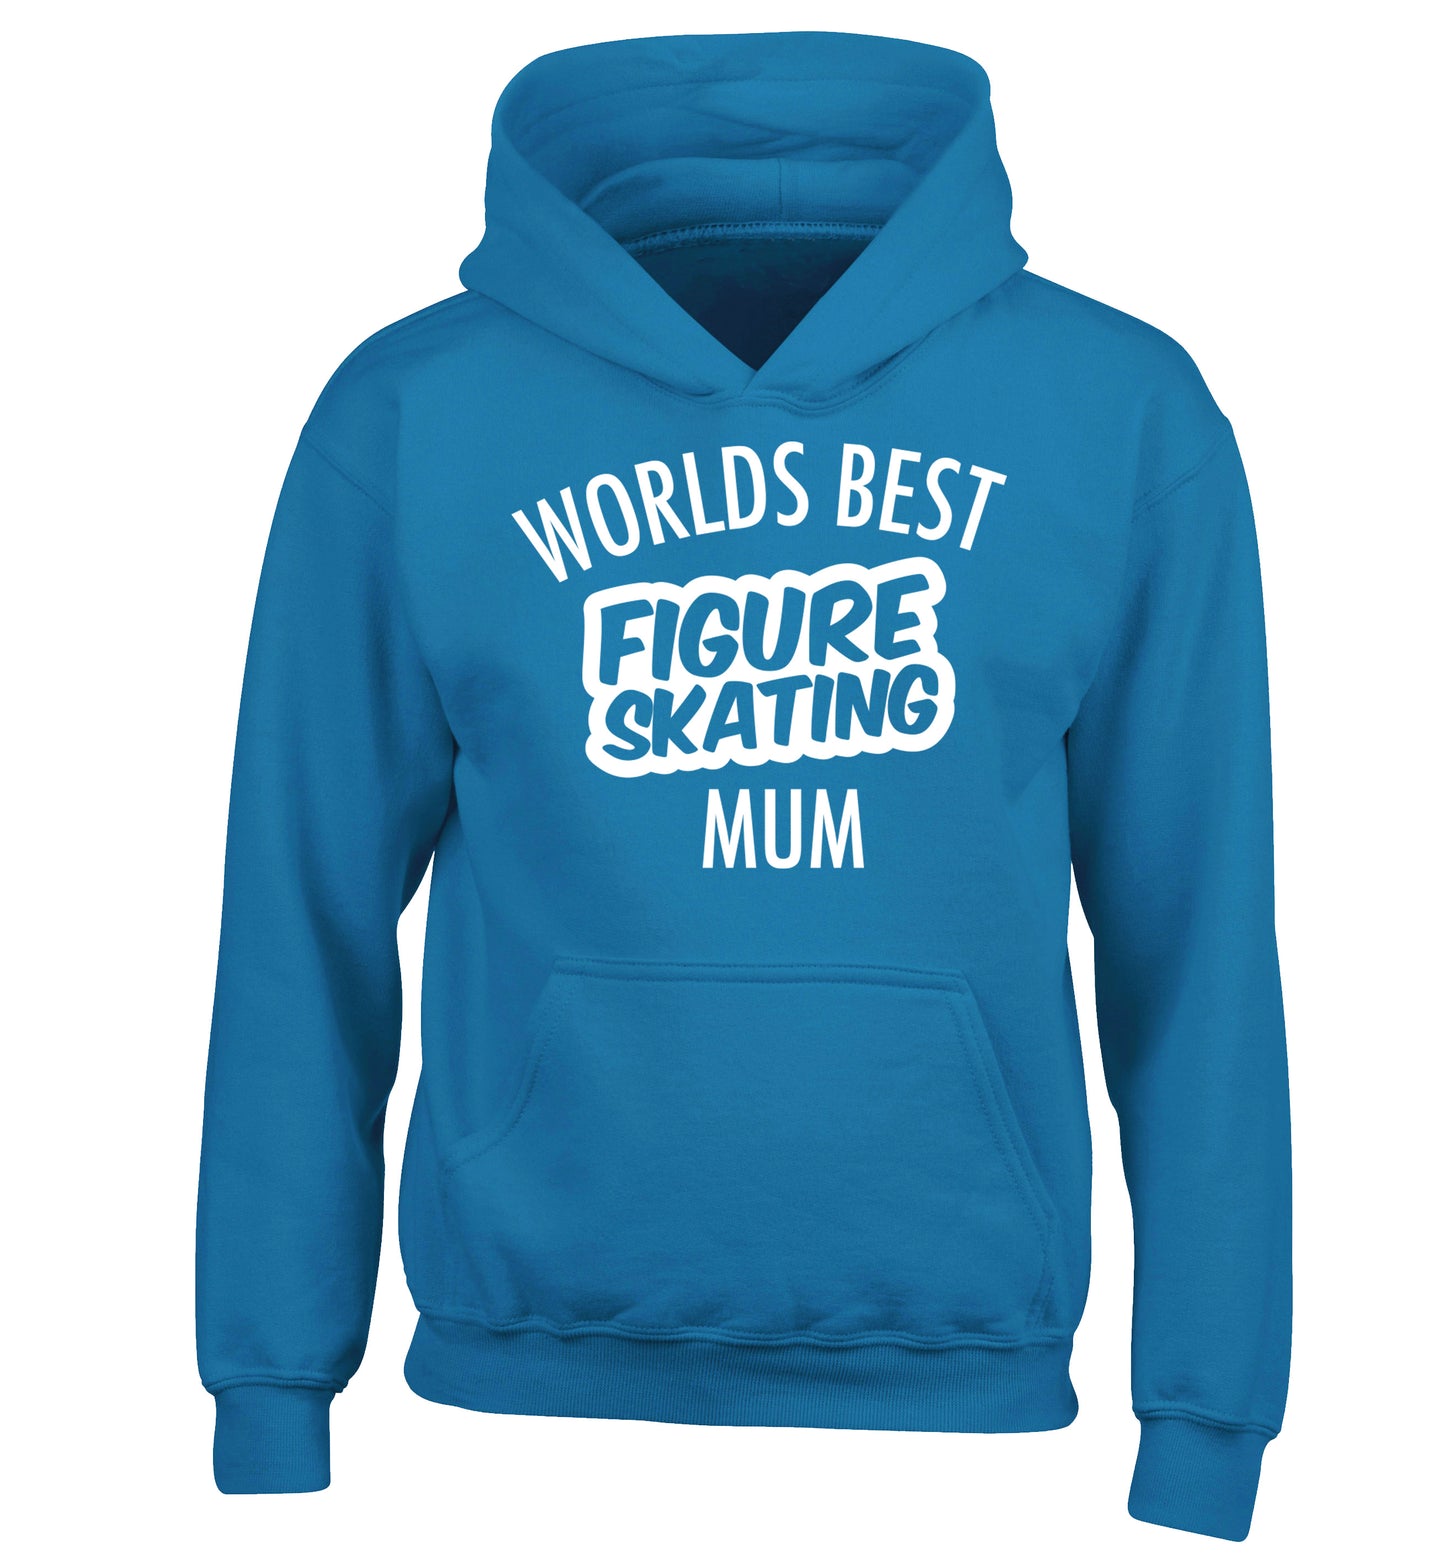 Worlds best figure skating mum children's blue hoodie 12-14 Years